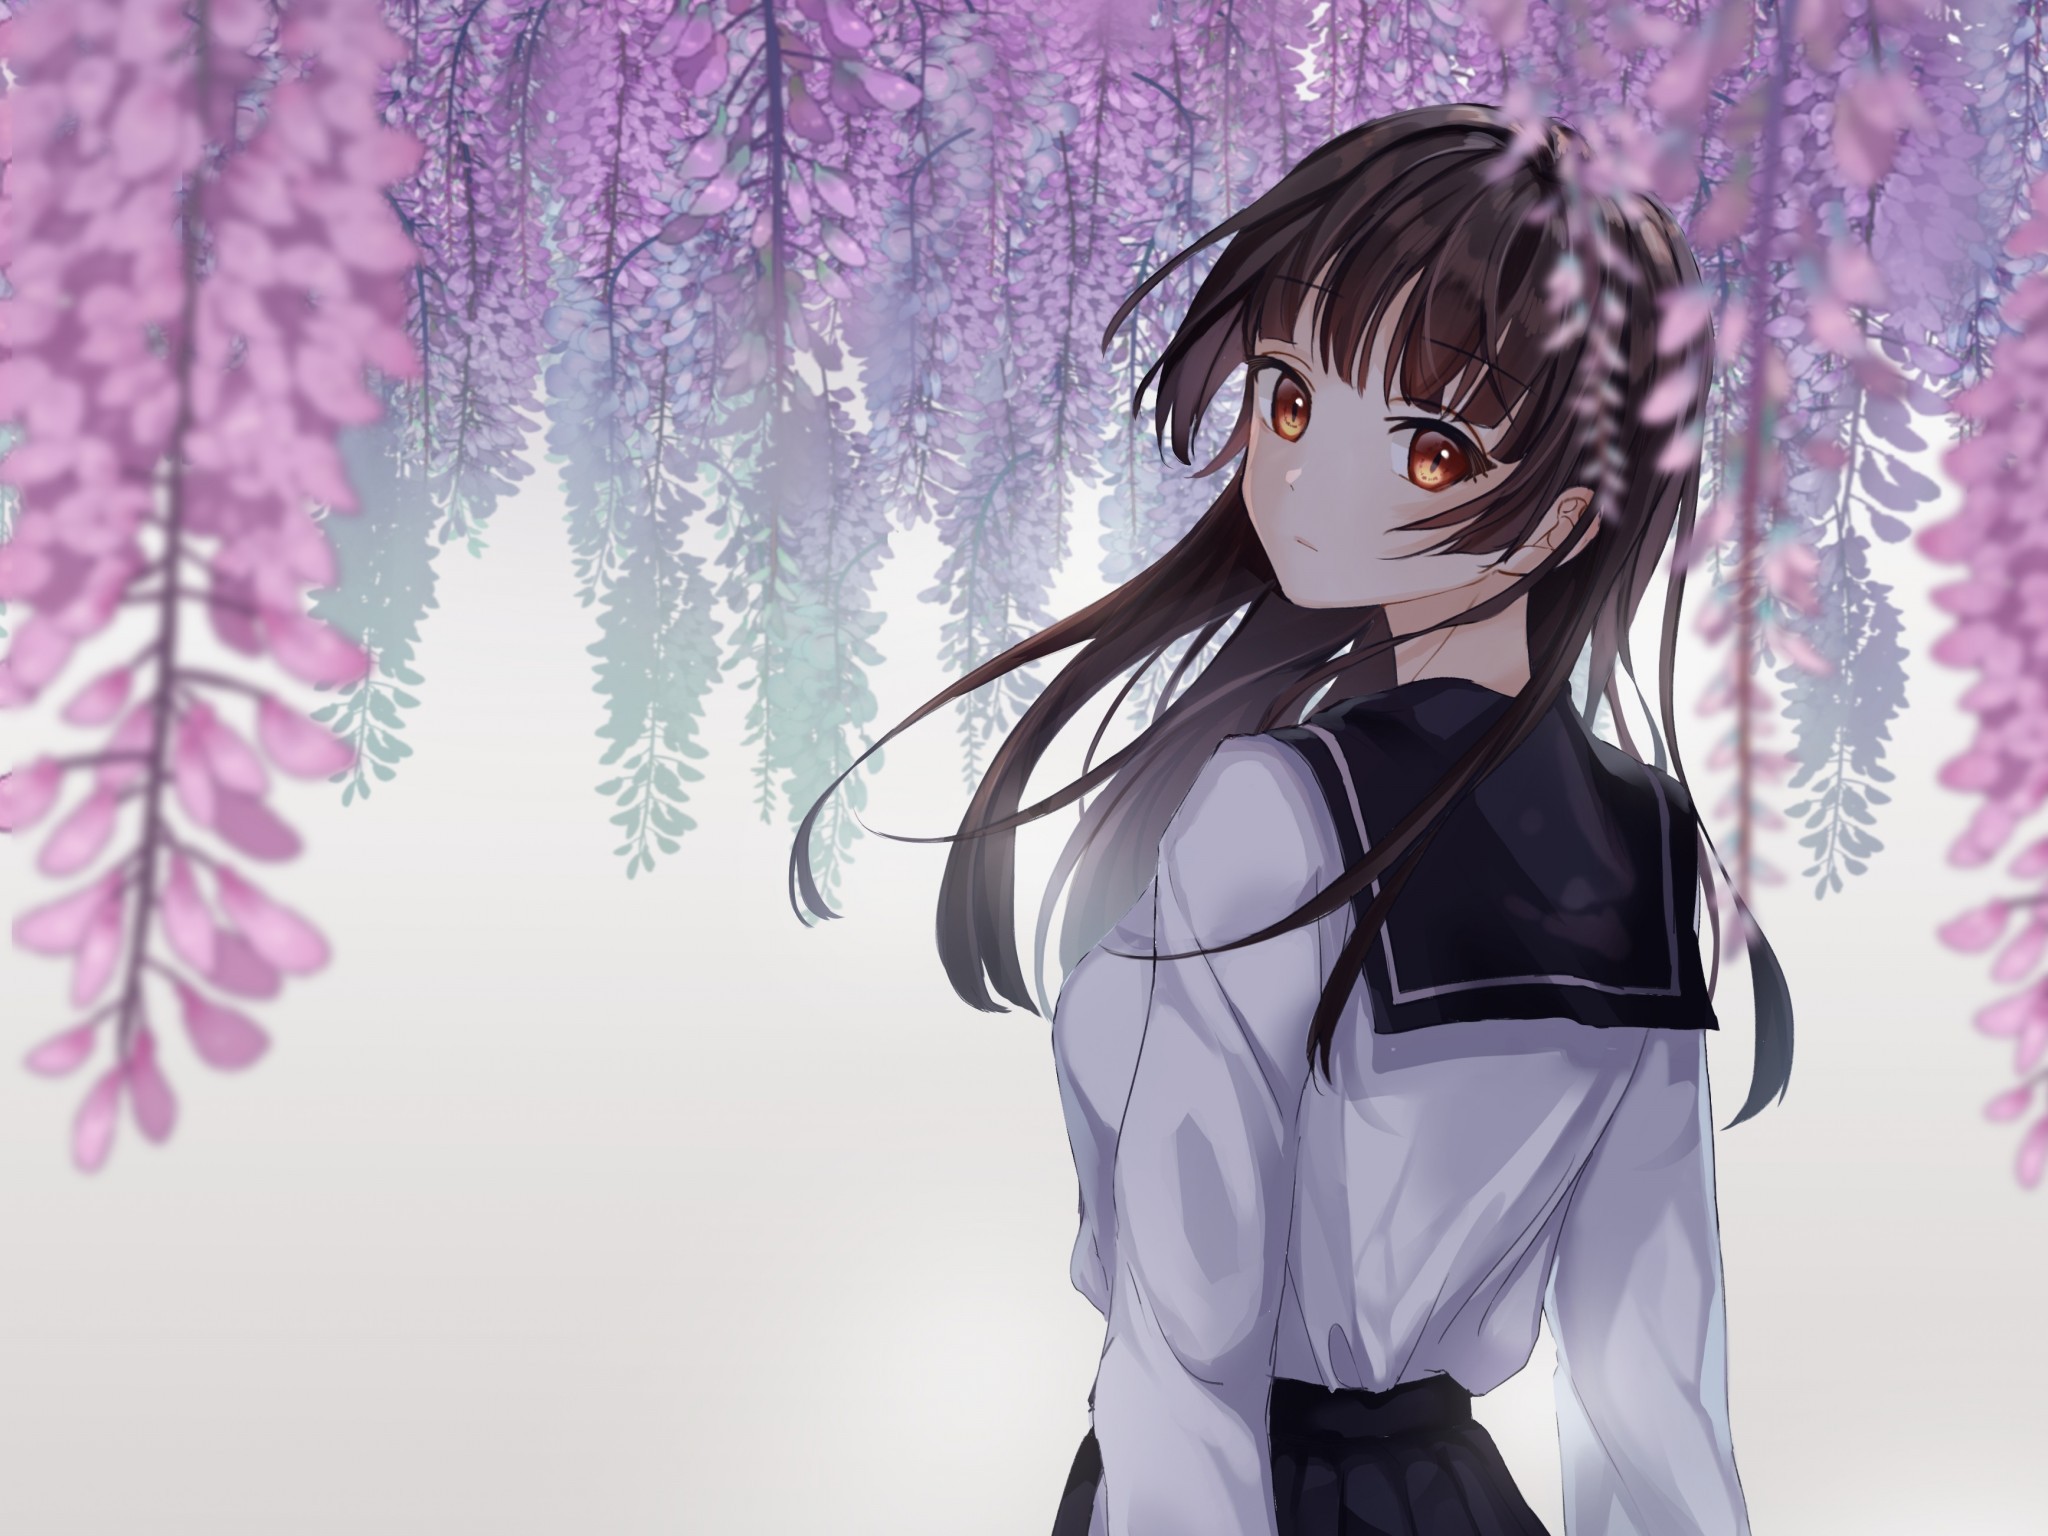 Anime School Girl, Cherry Blossom, Back View, School - 2048x1536 Wallpaper  